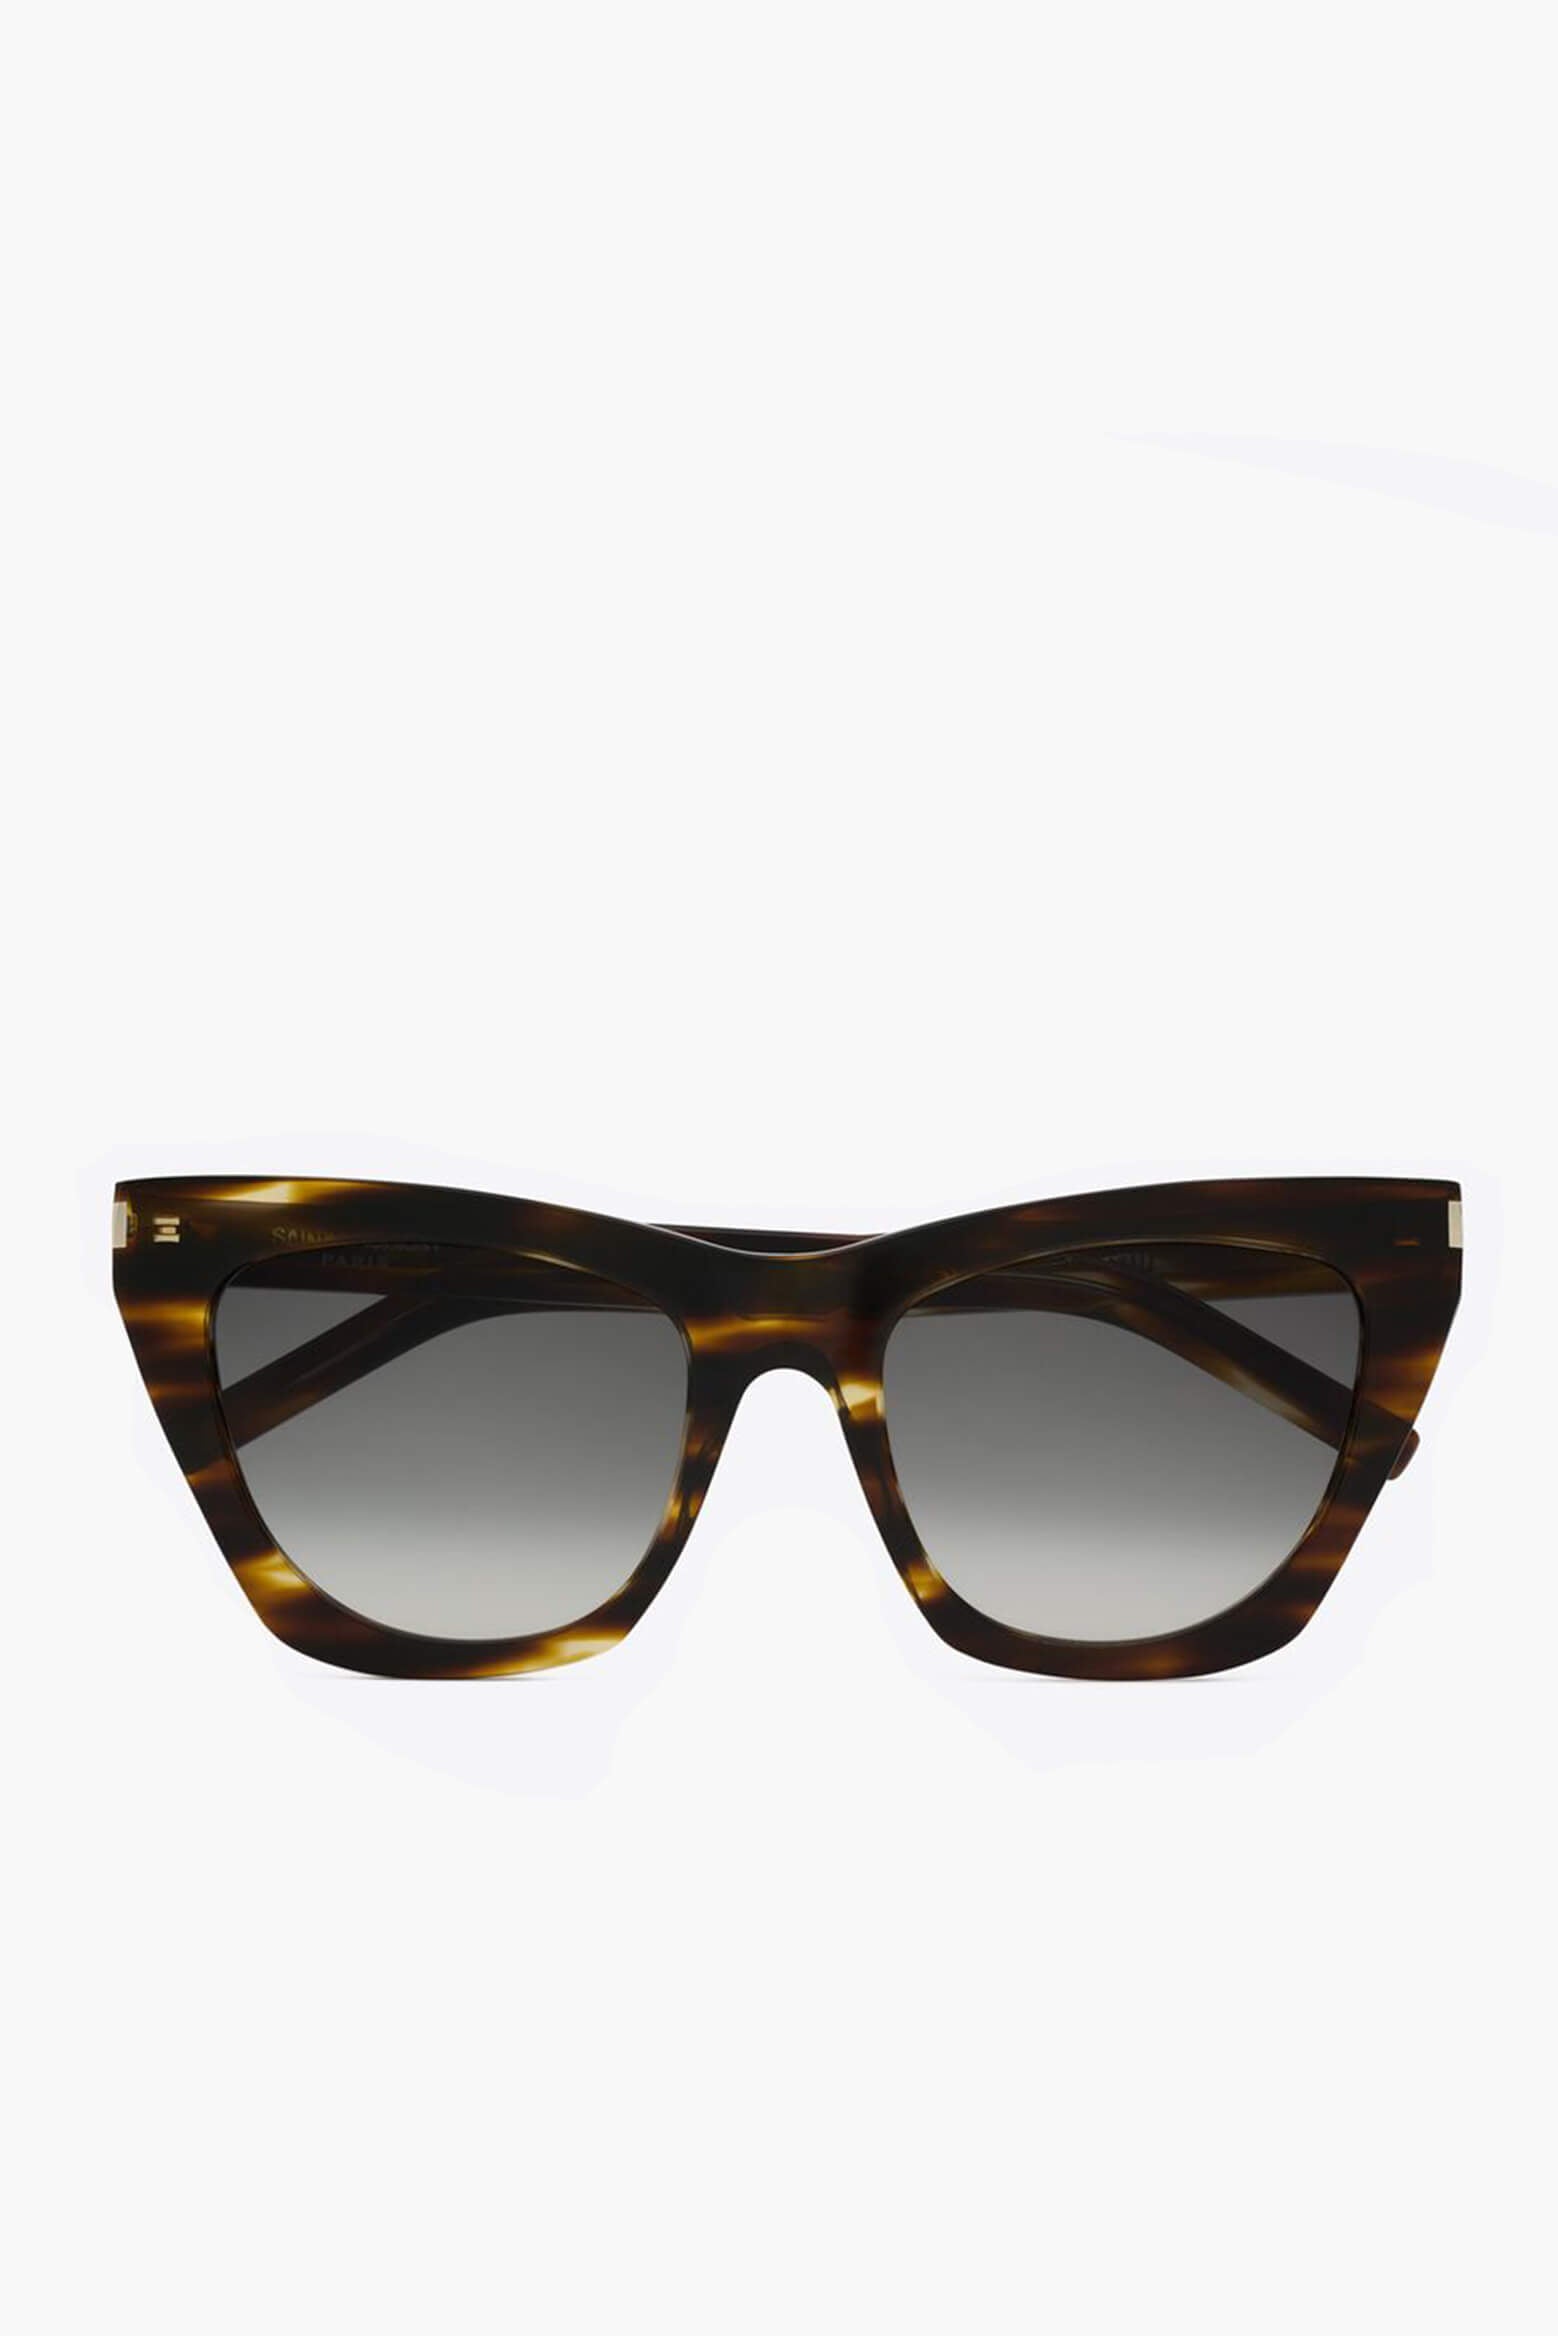 Saint Laurent Kate Sunglasses in Tortoise available at The New Trend Australia.